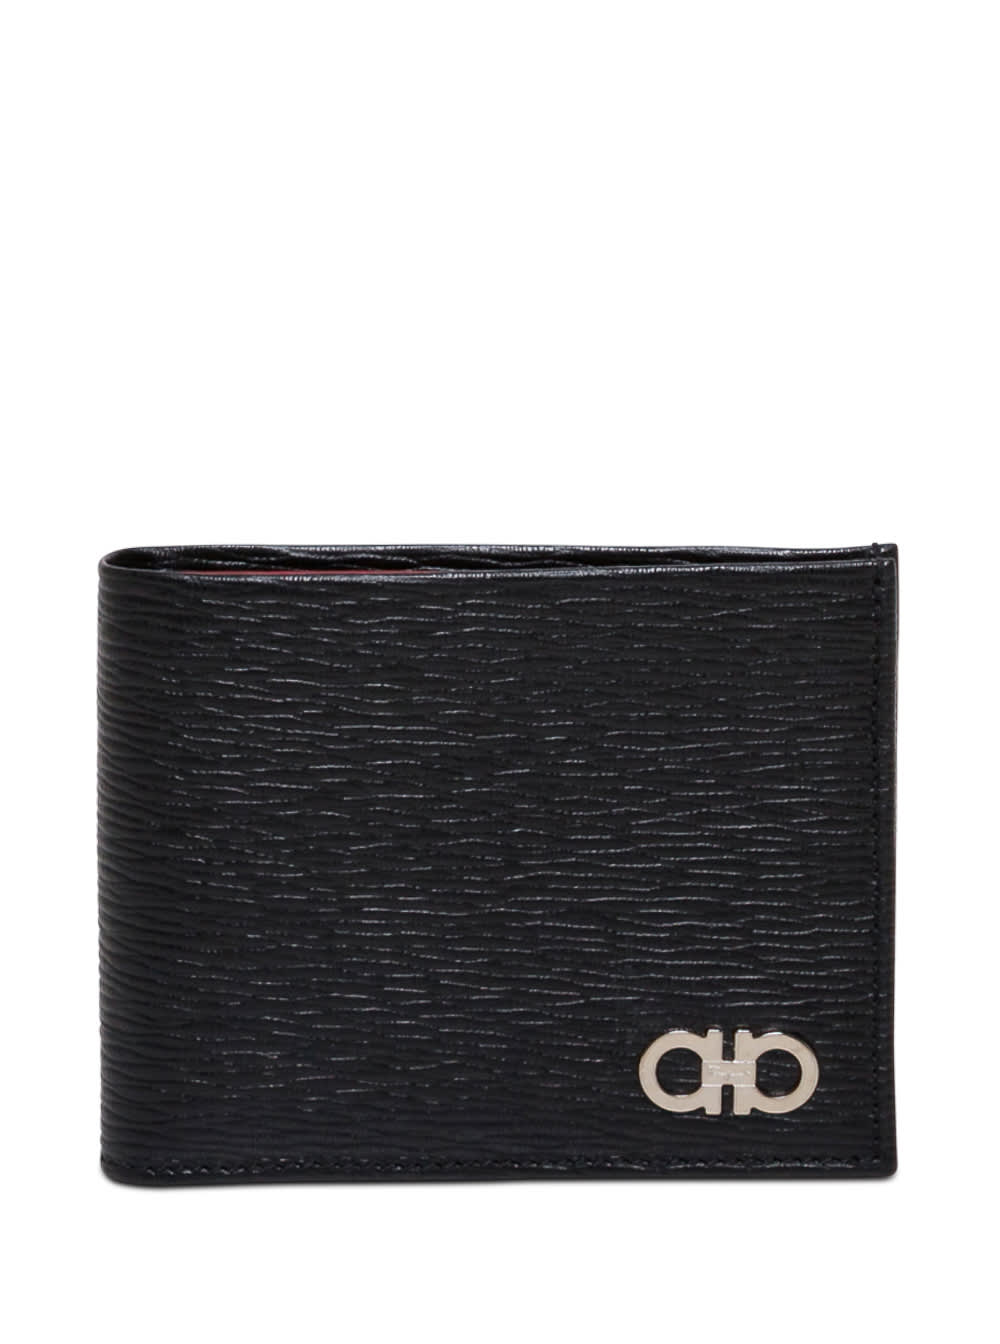 Salvatore Ferragamo Black Leather Revival Wallet With Ganicini Logo